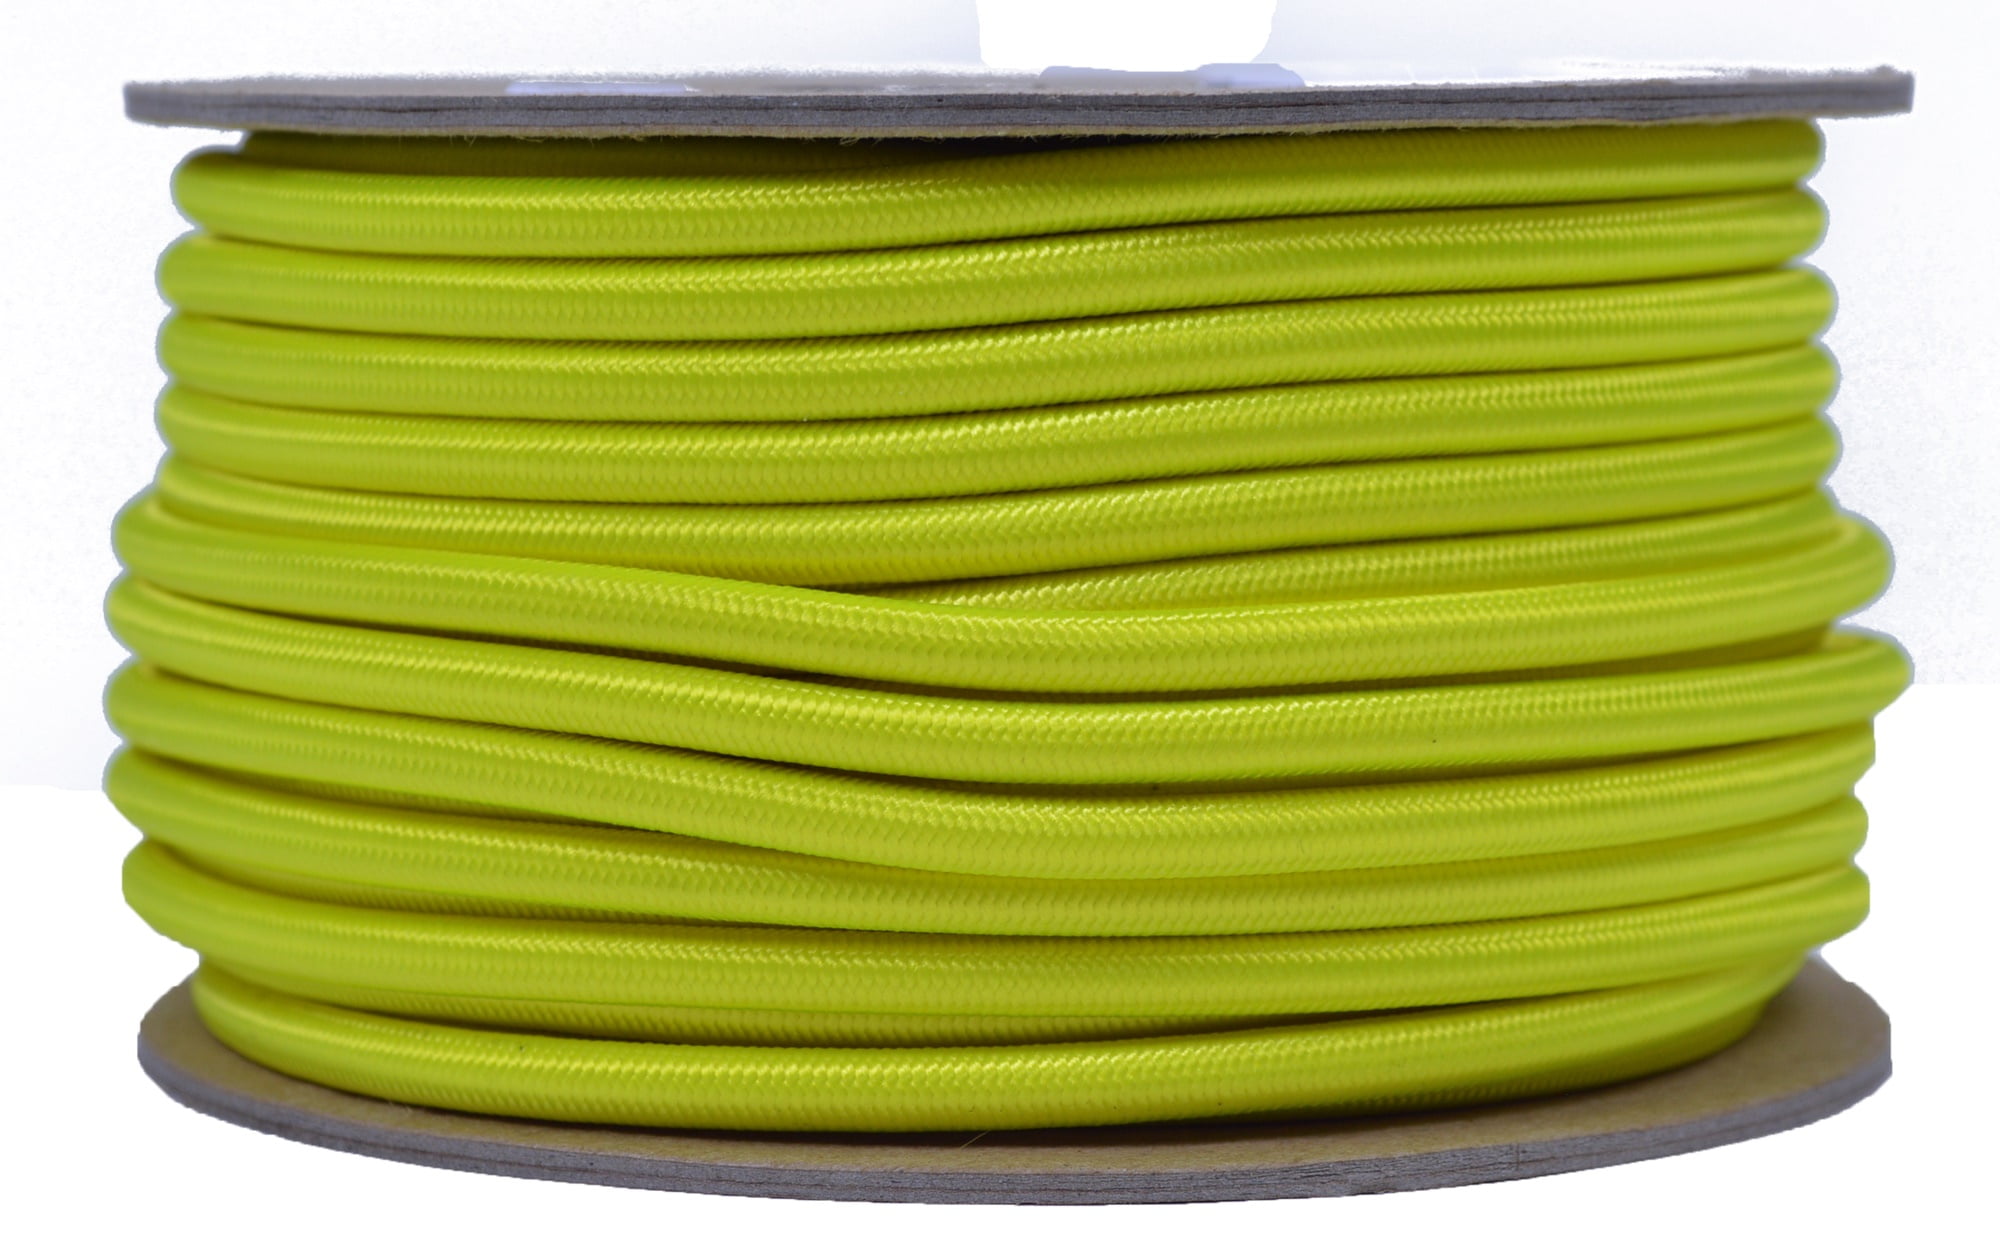 Neon Yellow 3/16 inch Shock Cord - 100 Feet Marine Grade Shock